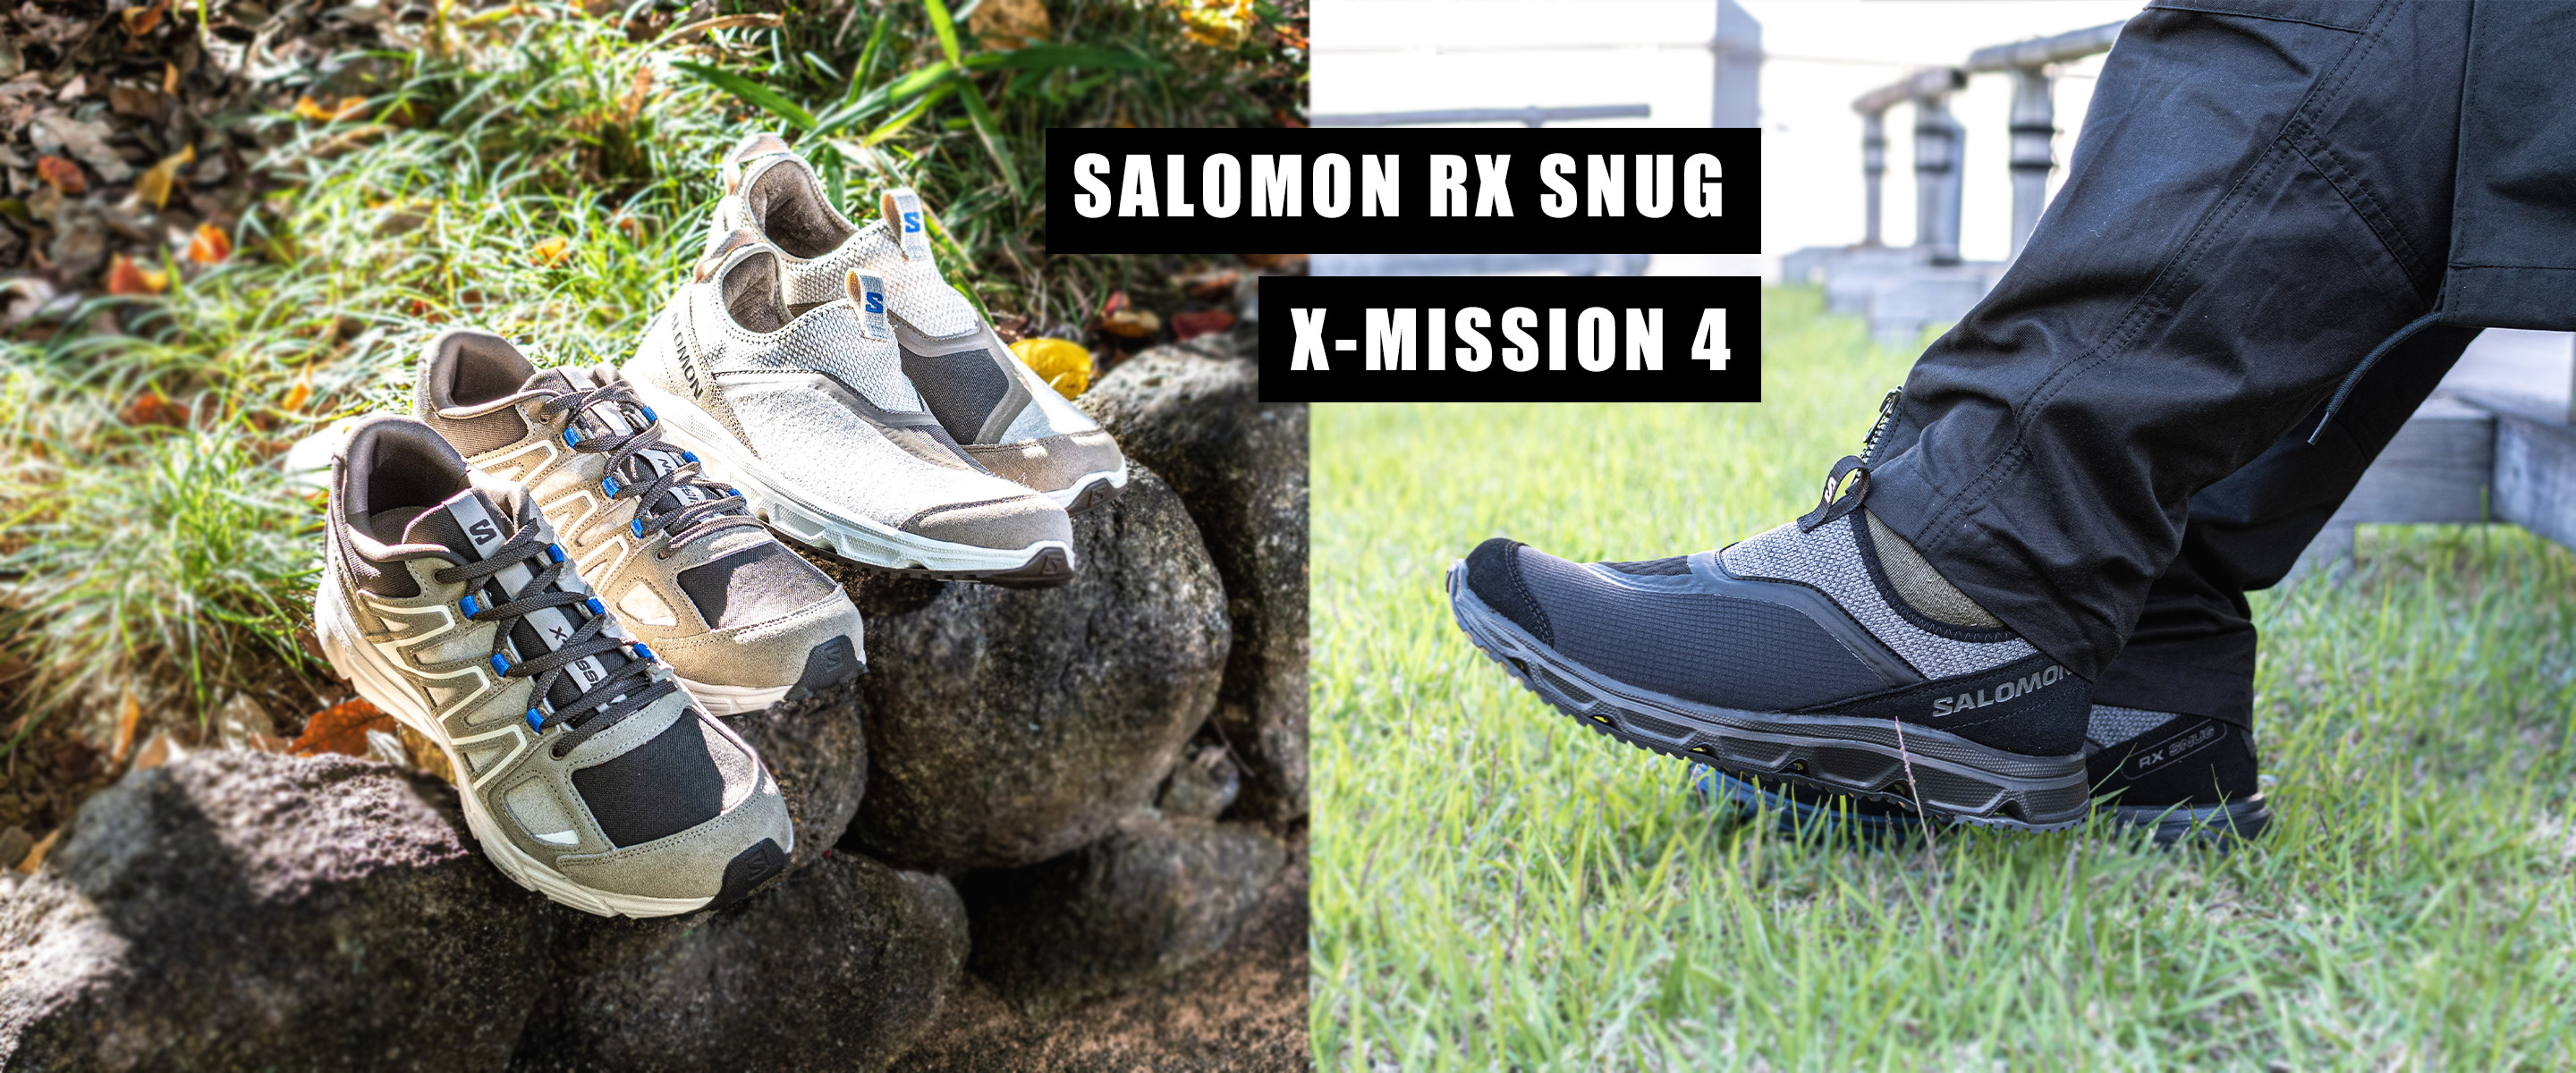 "SALOMON RX SNUG / X-MISSION 4"